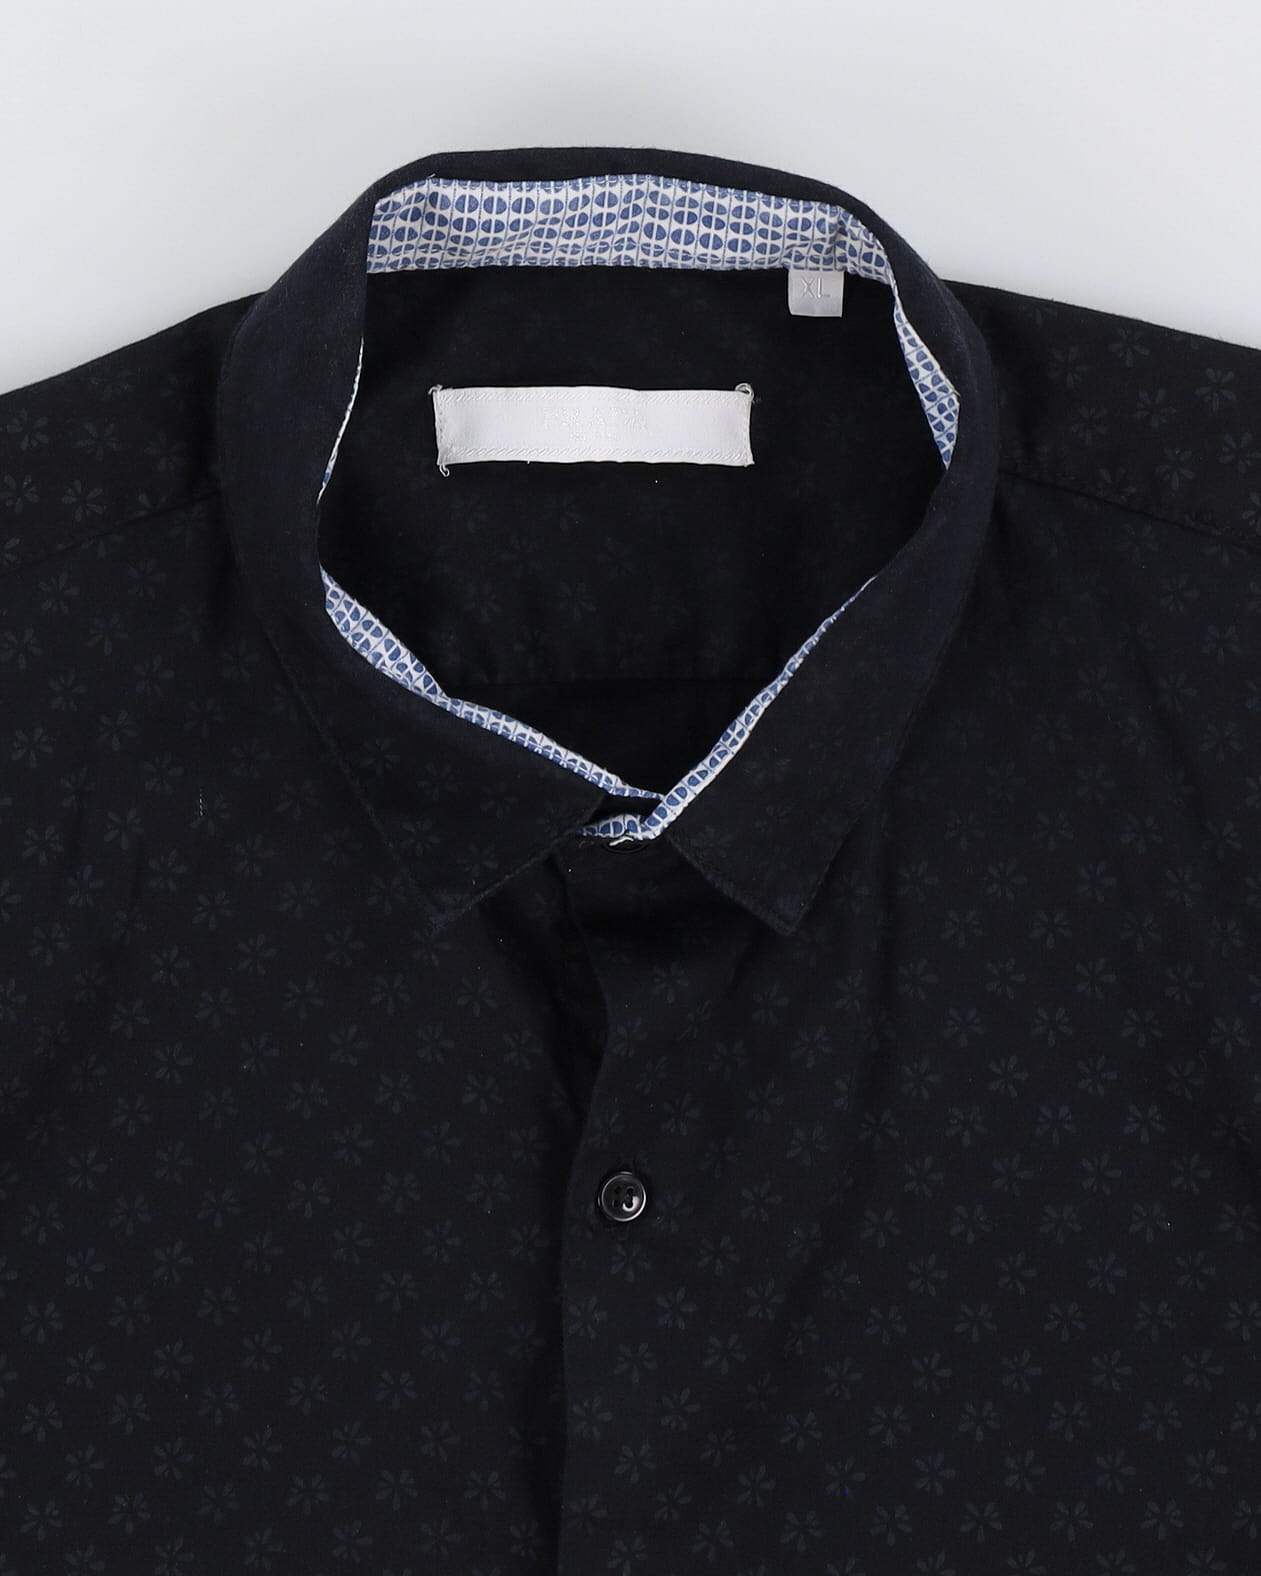 Prada Patterned Black Long-Sleeve Shirt - L / XL